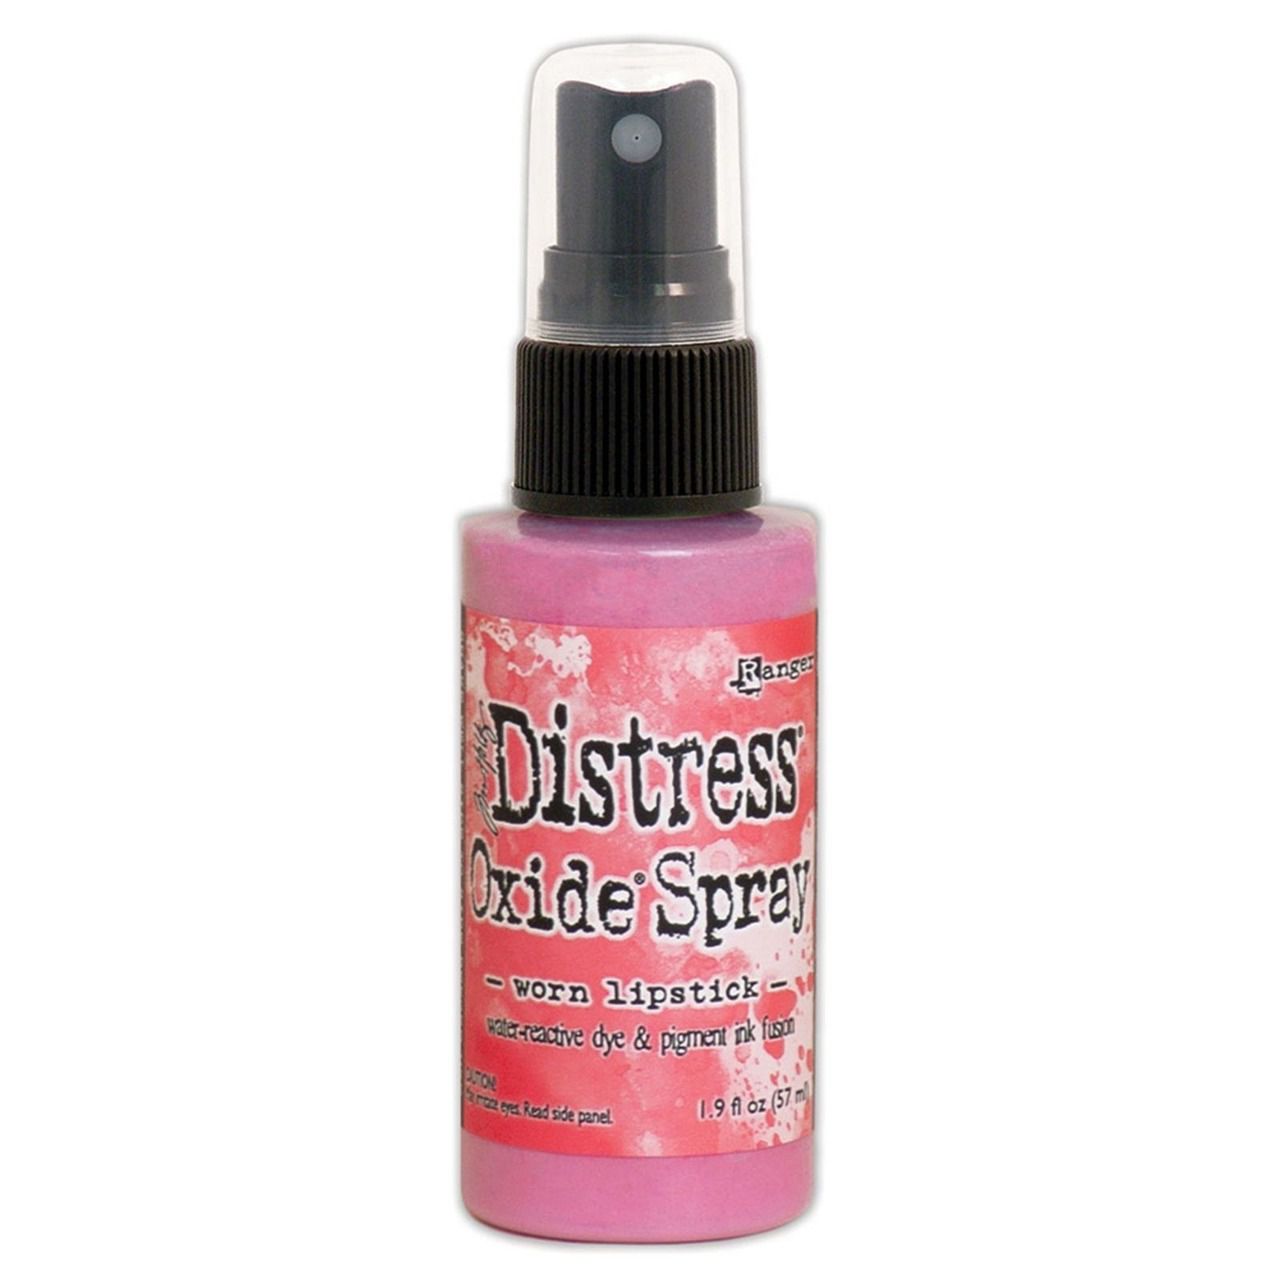 Distress spray oxide : Worn lipstick